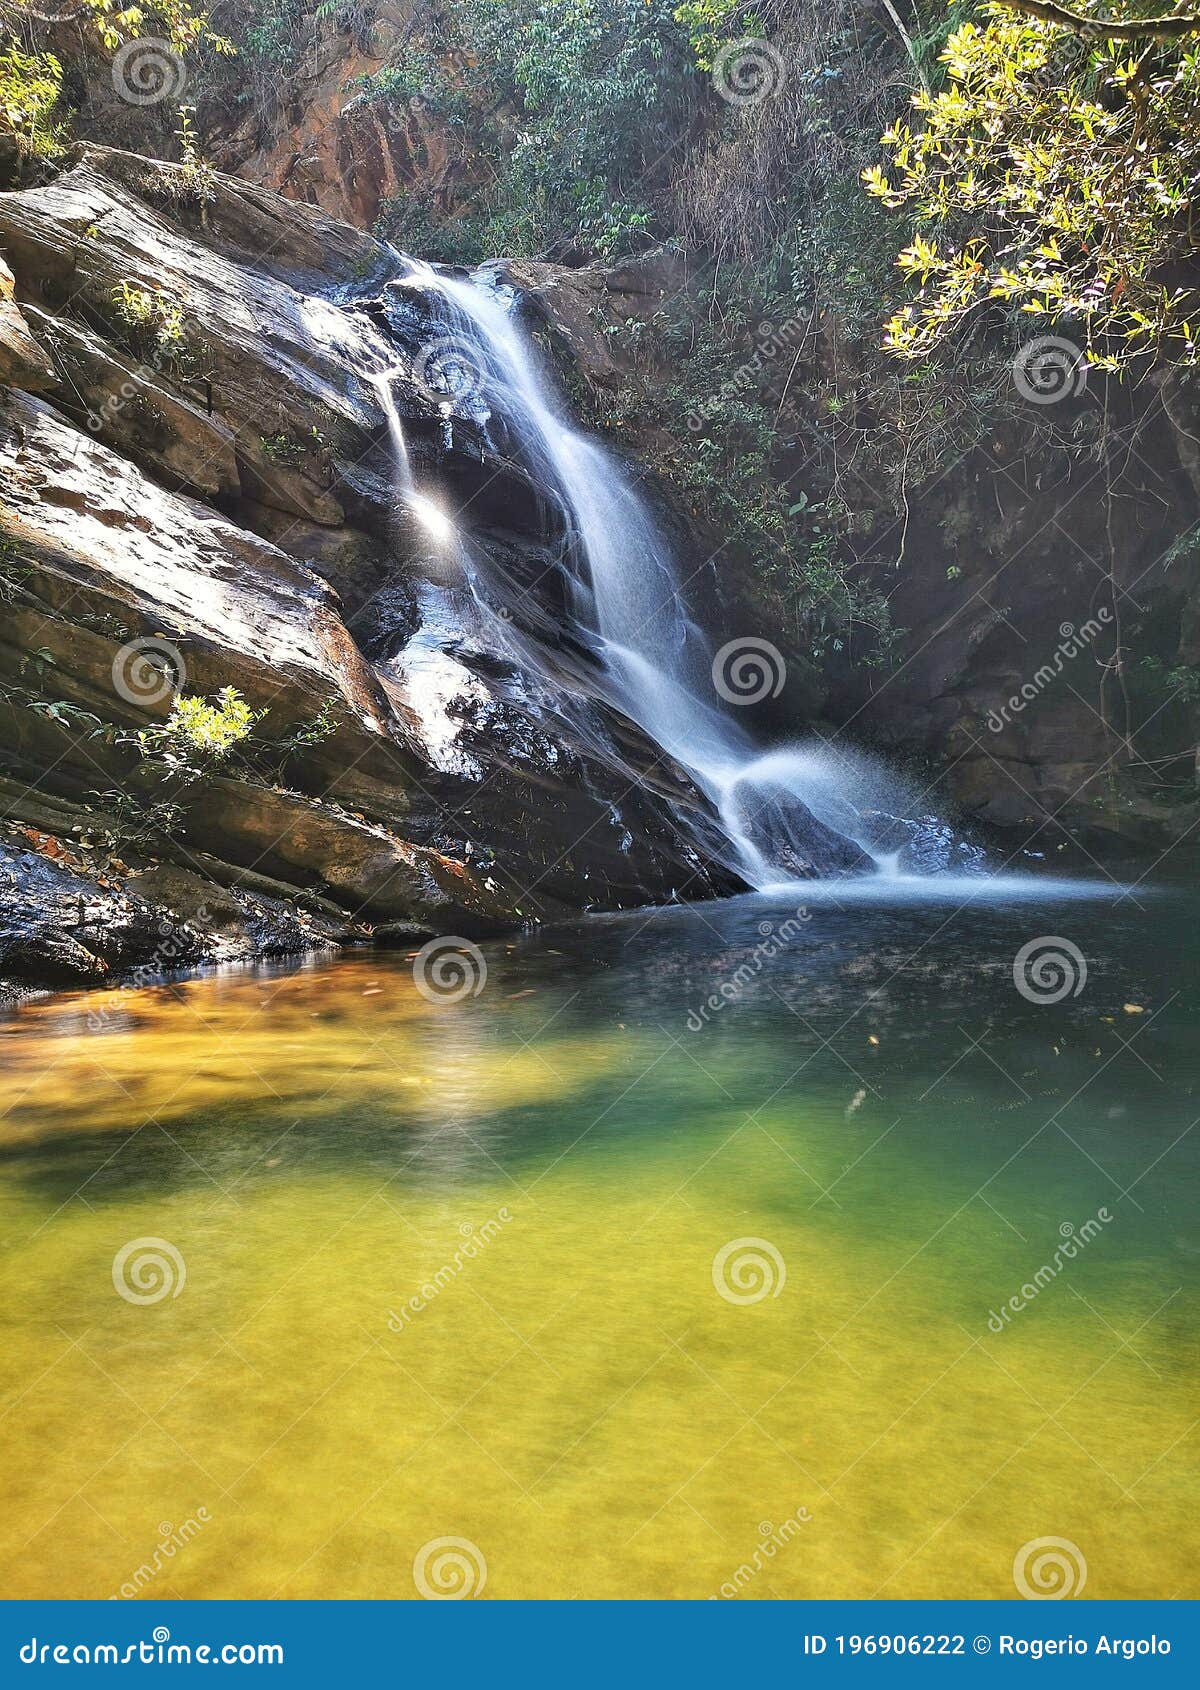 waterfall cruzados at acuruÃÂ­, minas gerais, brazil